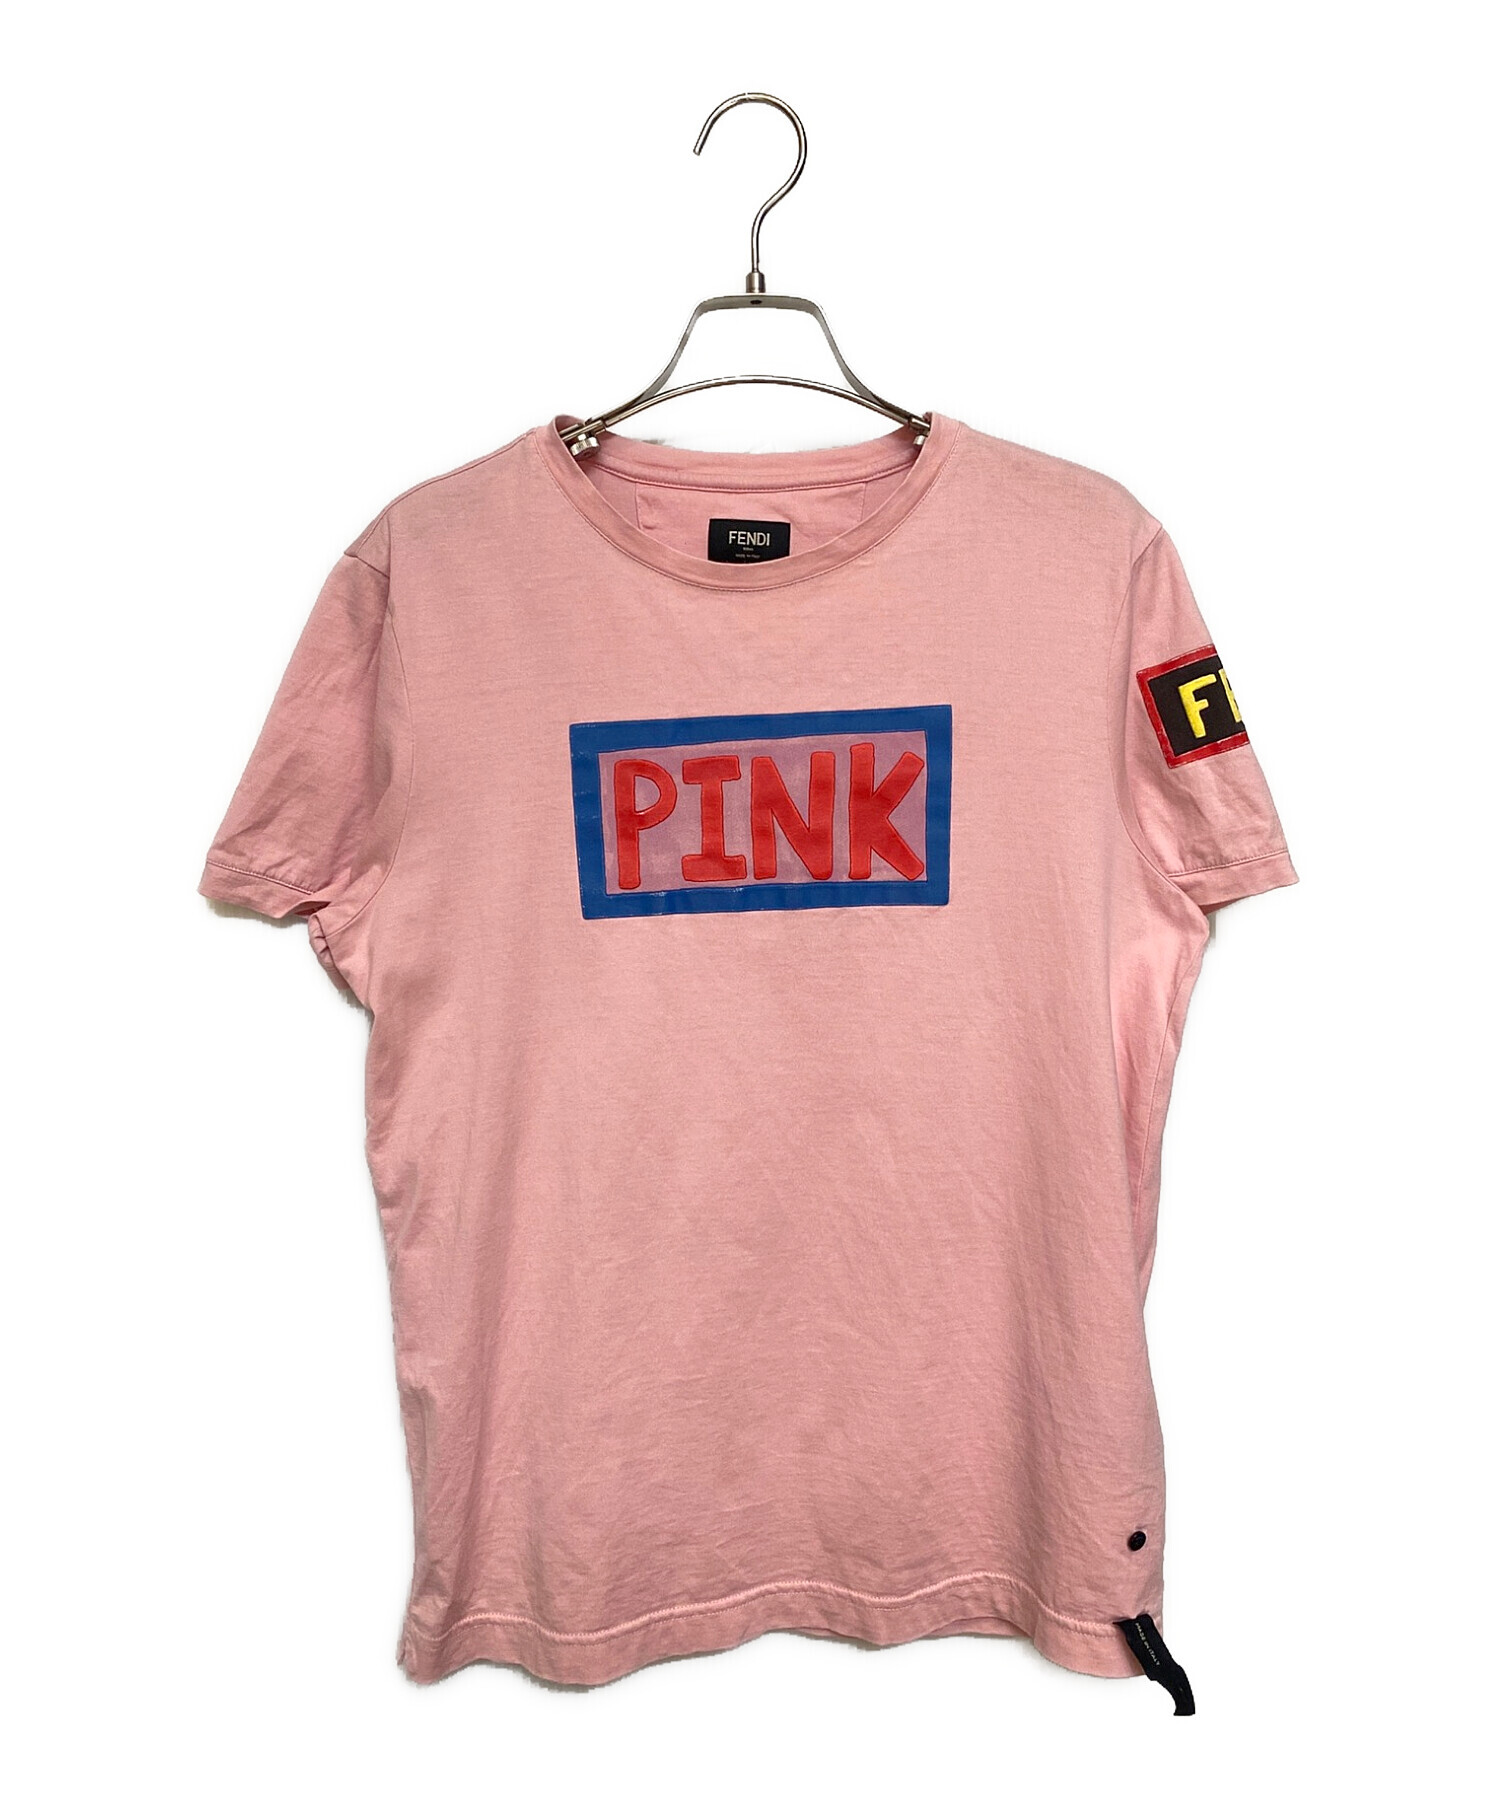 FENDI (フェンディ) ロゴデザインTシャツ ピンク サイズ:46